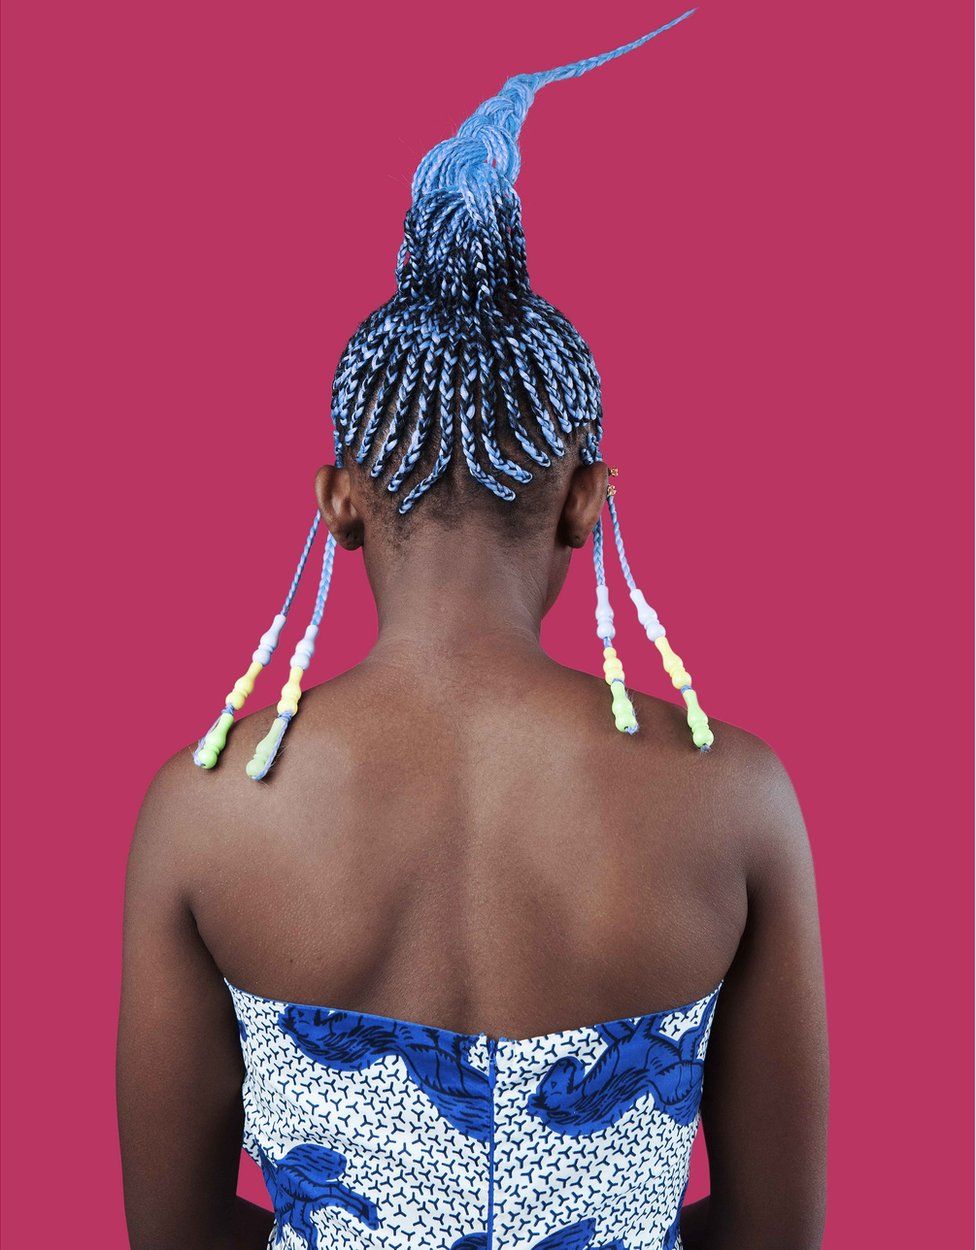 Portrait by Medina Dugger showing African hair braiding